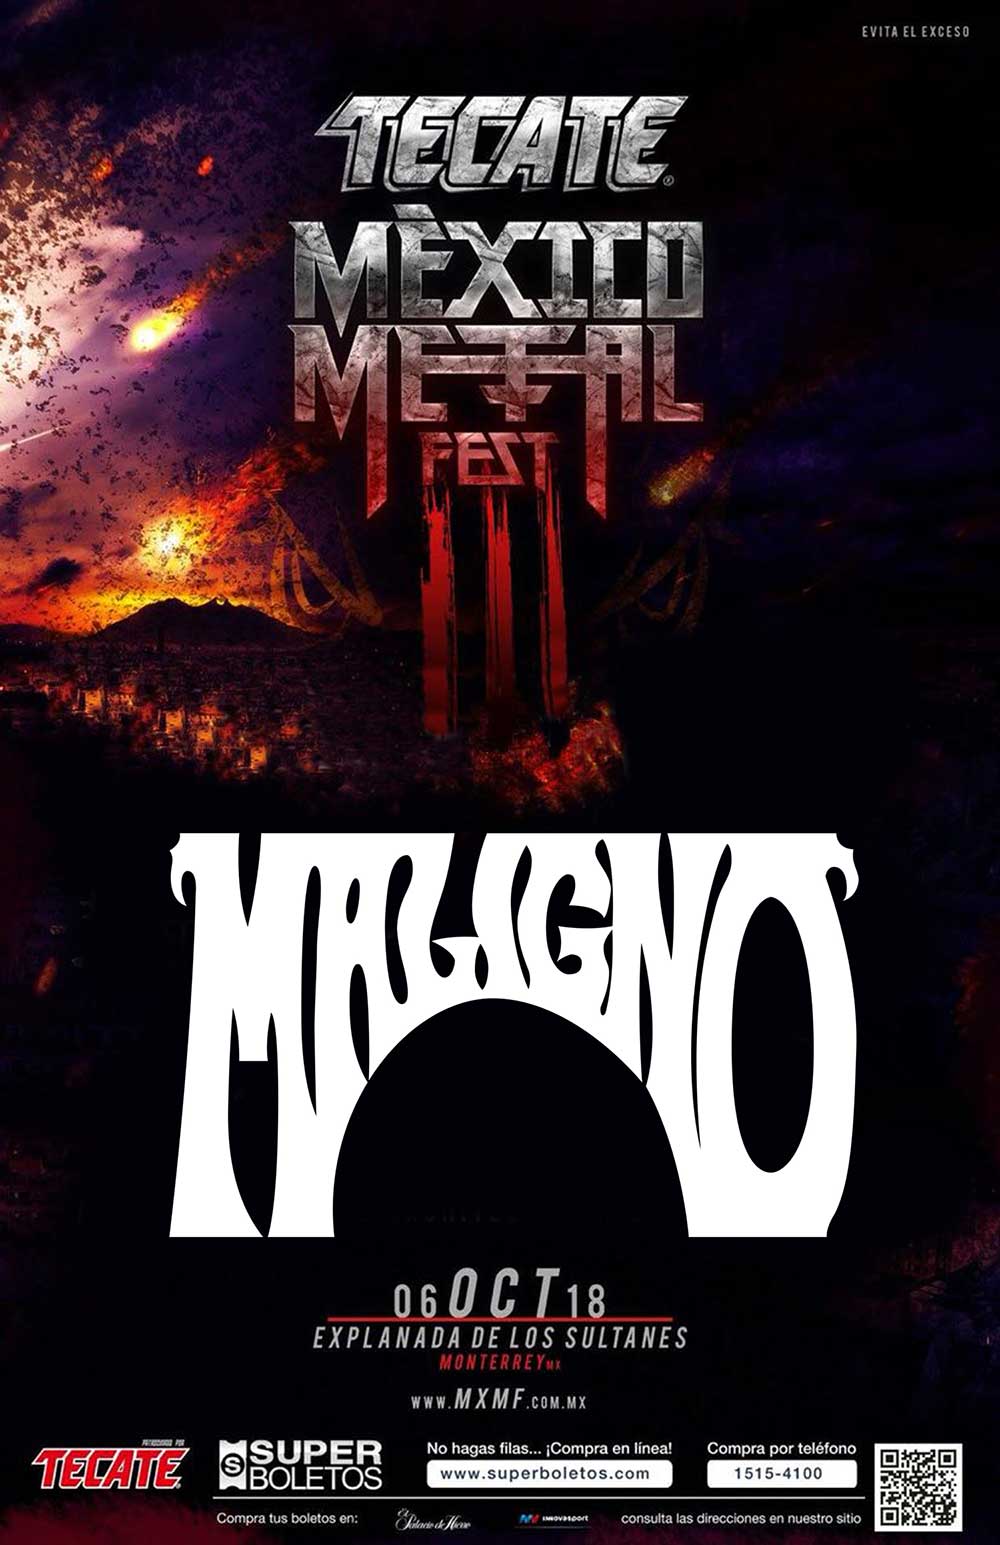 Maligno @ Tecate México Metal Fest III